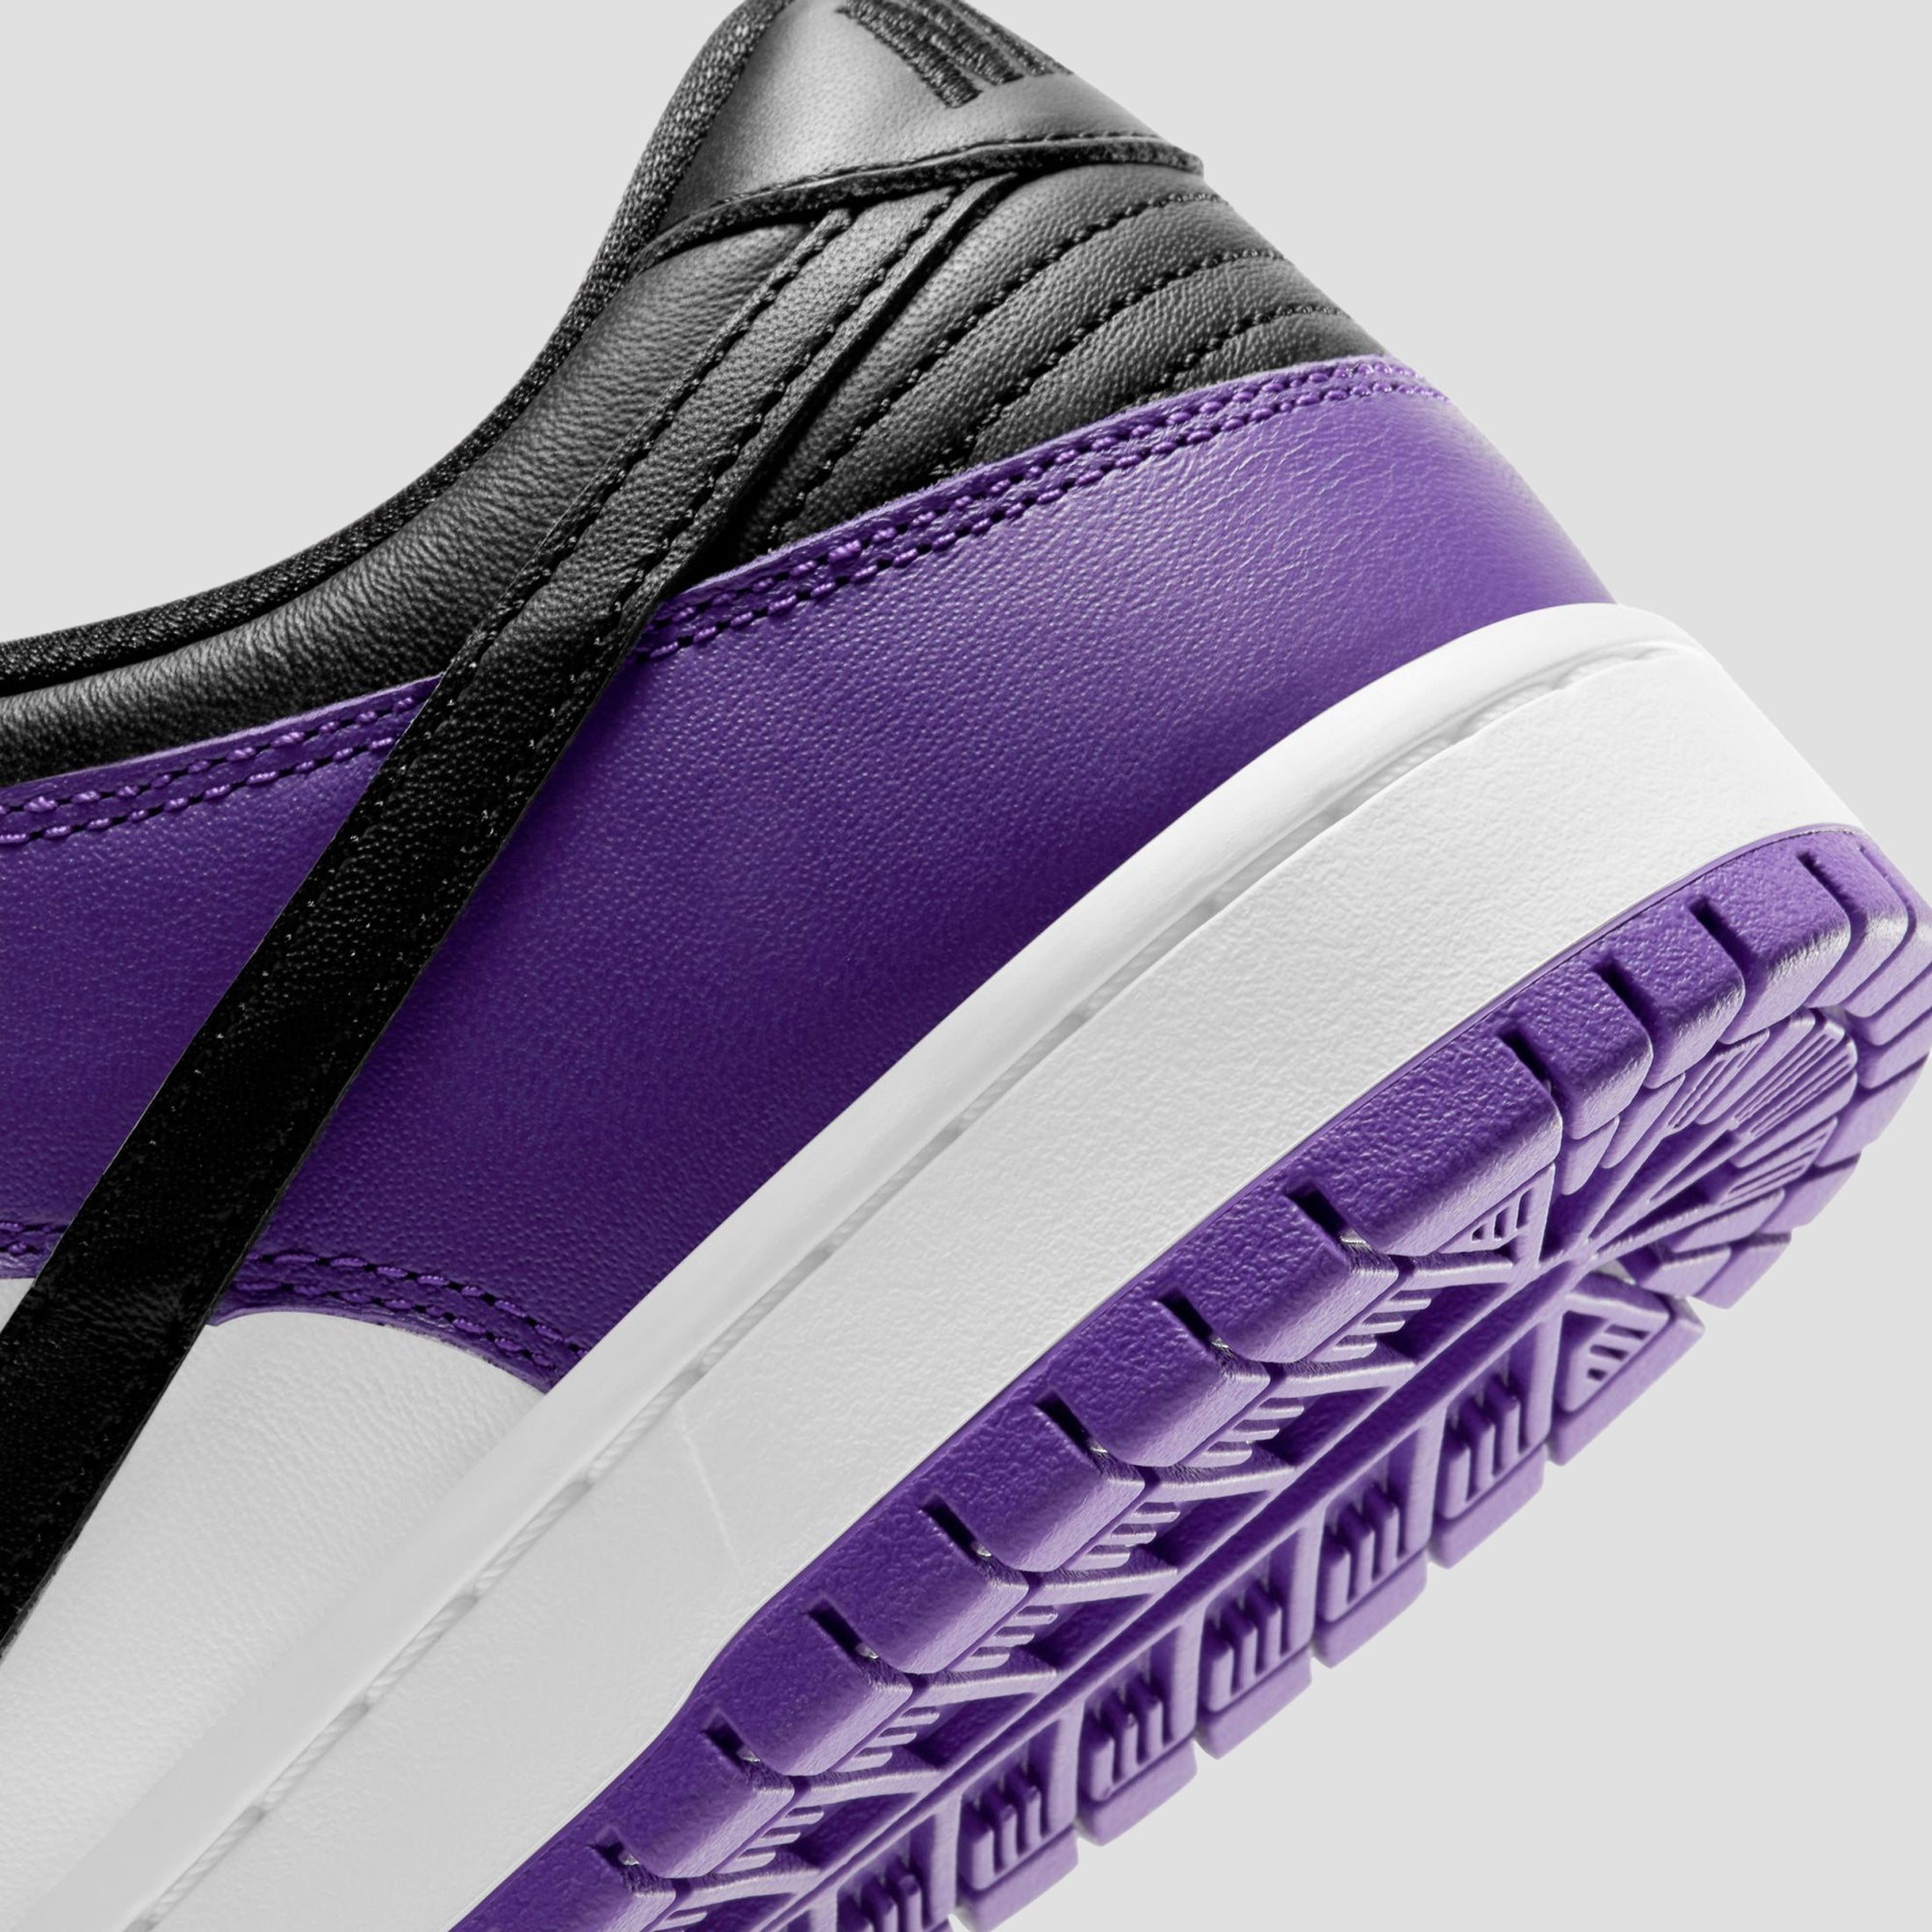 Nike SB Dunk Low Pro Shoes Court Purple / Black - White - Court Purple